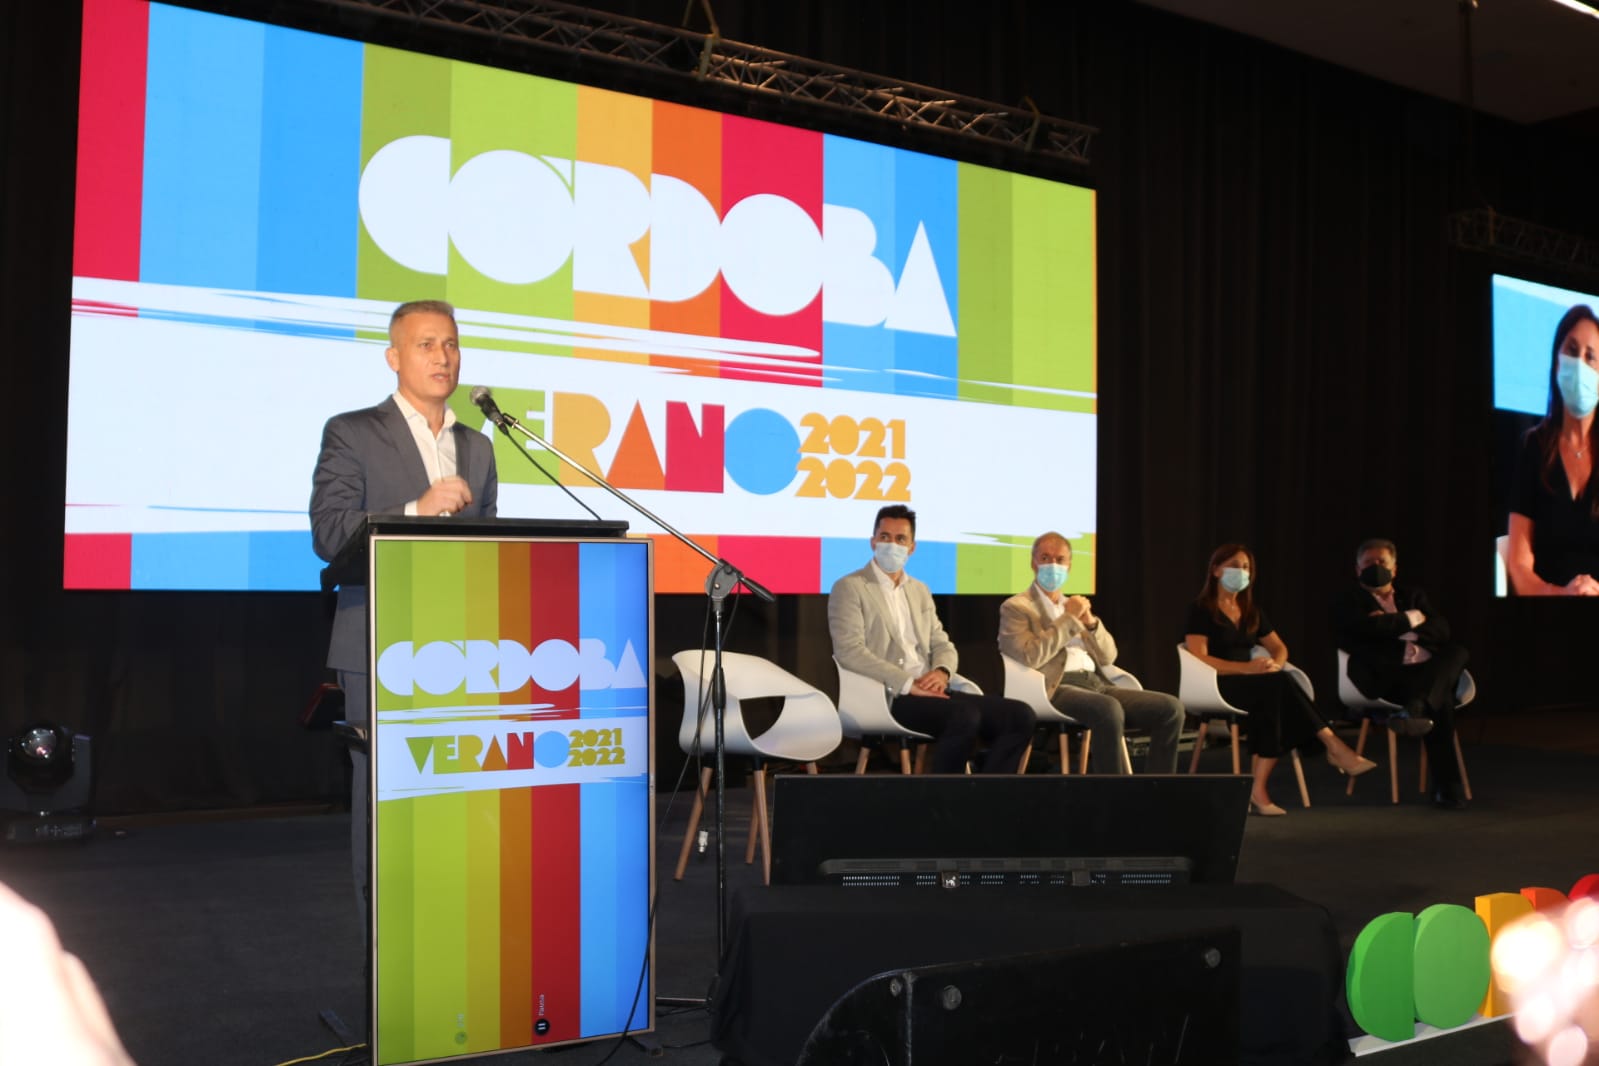 Córdoba lanzó su temporada turística Verano 2021-2022